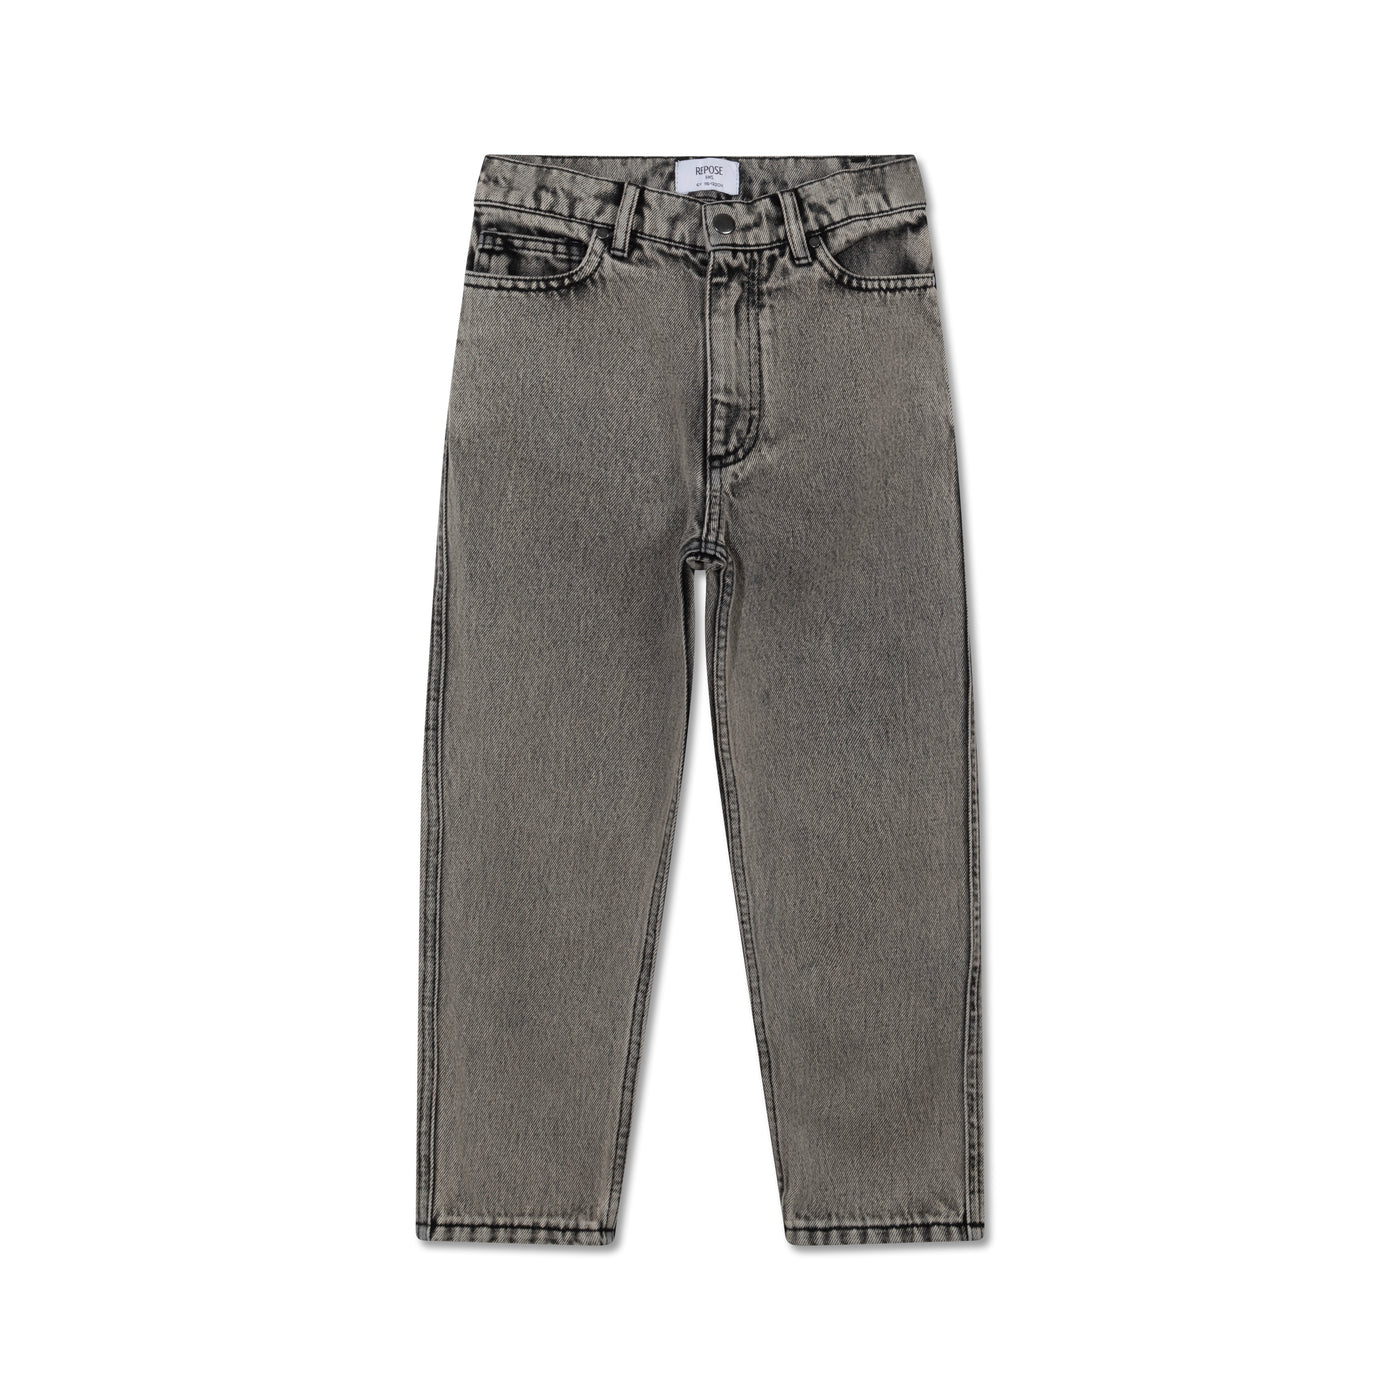 5 pocket jean - medium washed grey